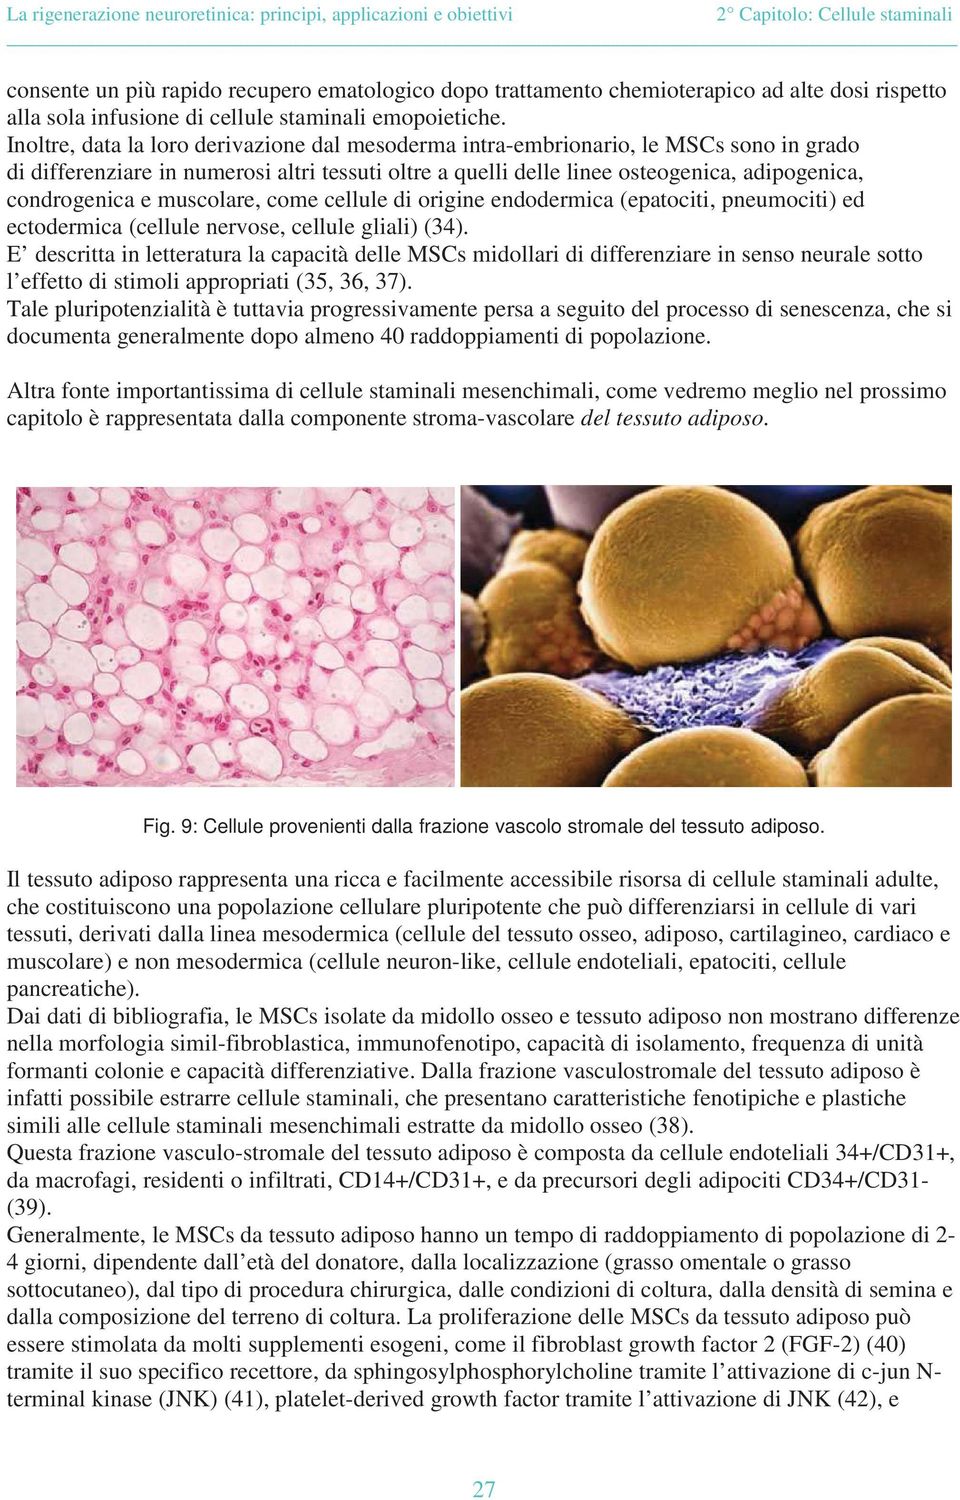 muscolare, come cellule di origine endodermica (epatociti, pneumociti) ed ectodermica (cellule nervose, cellule gliali) (34).